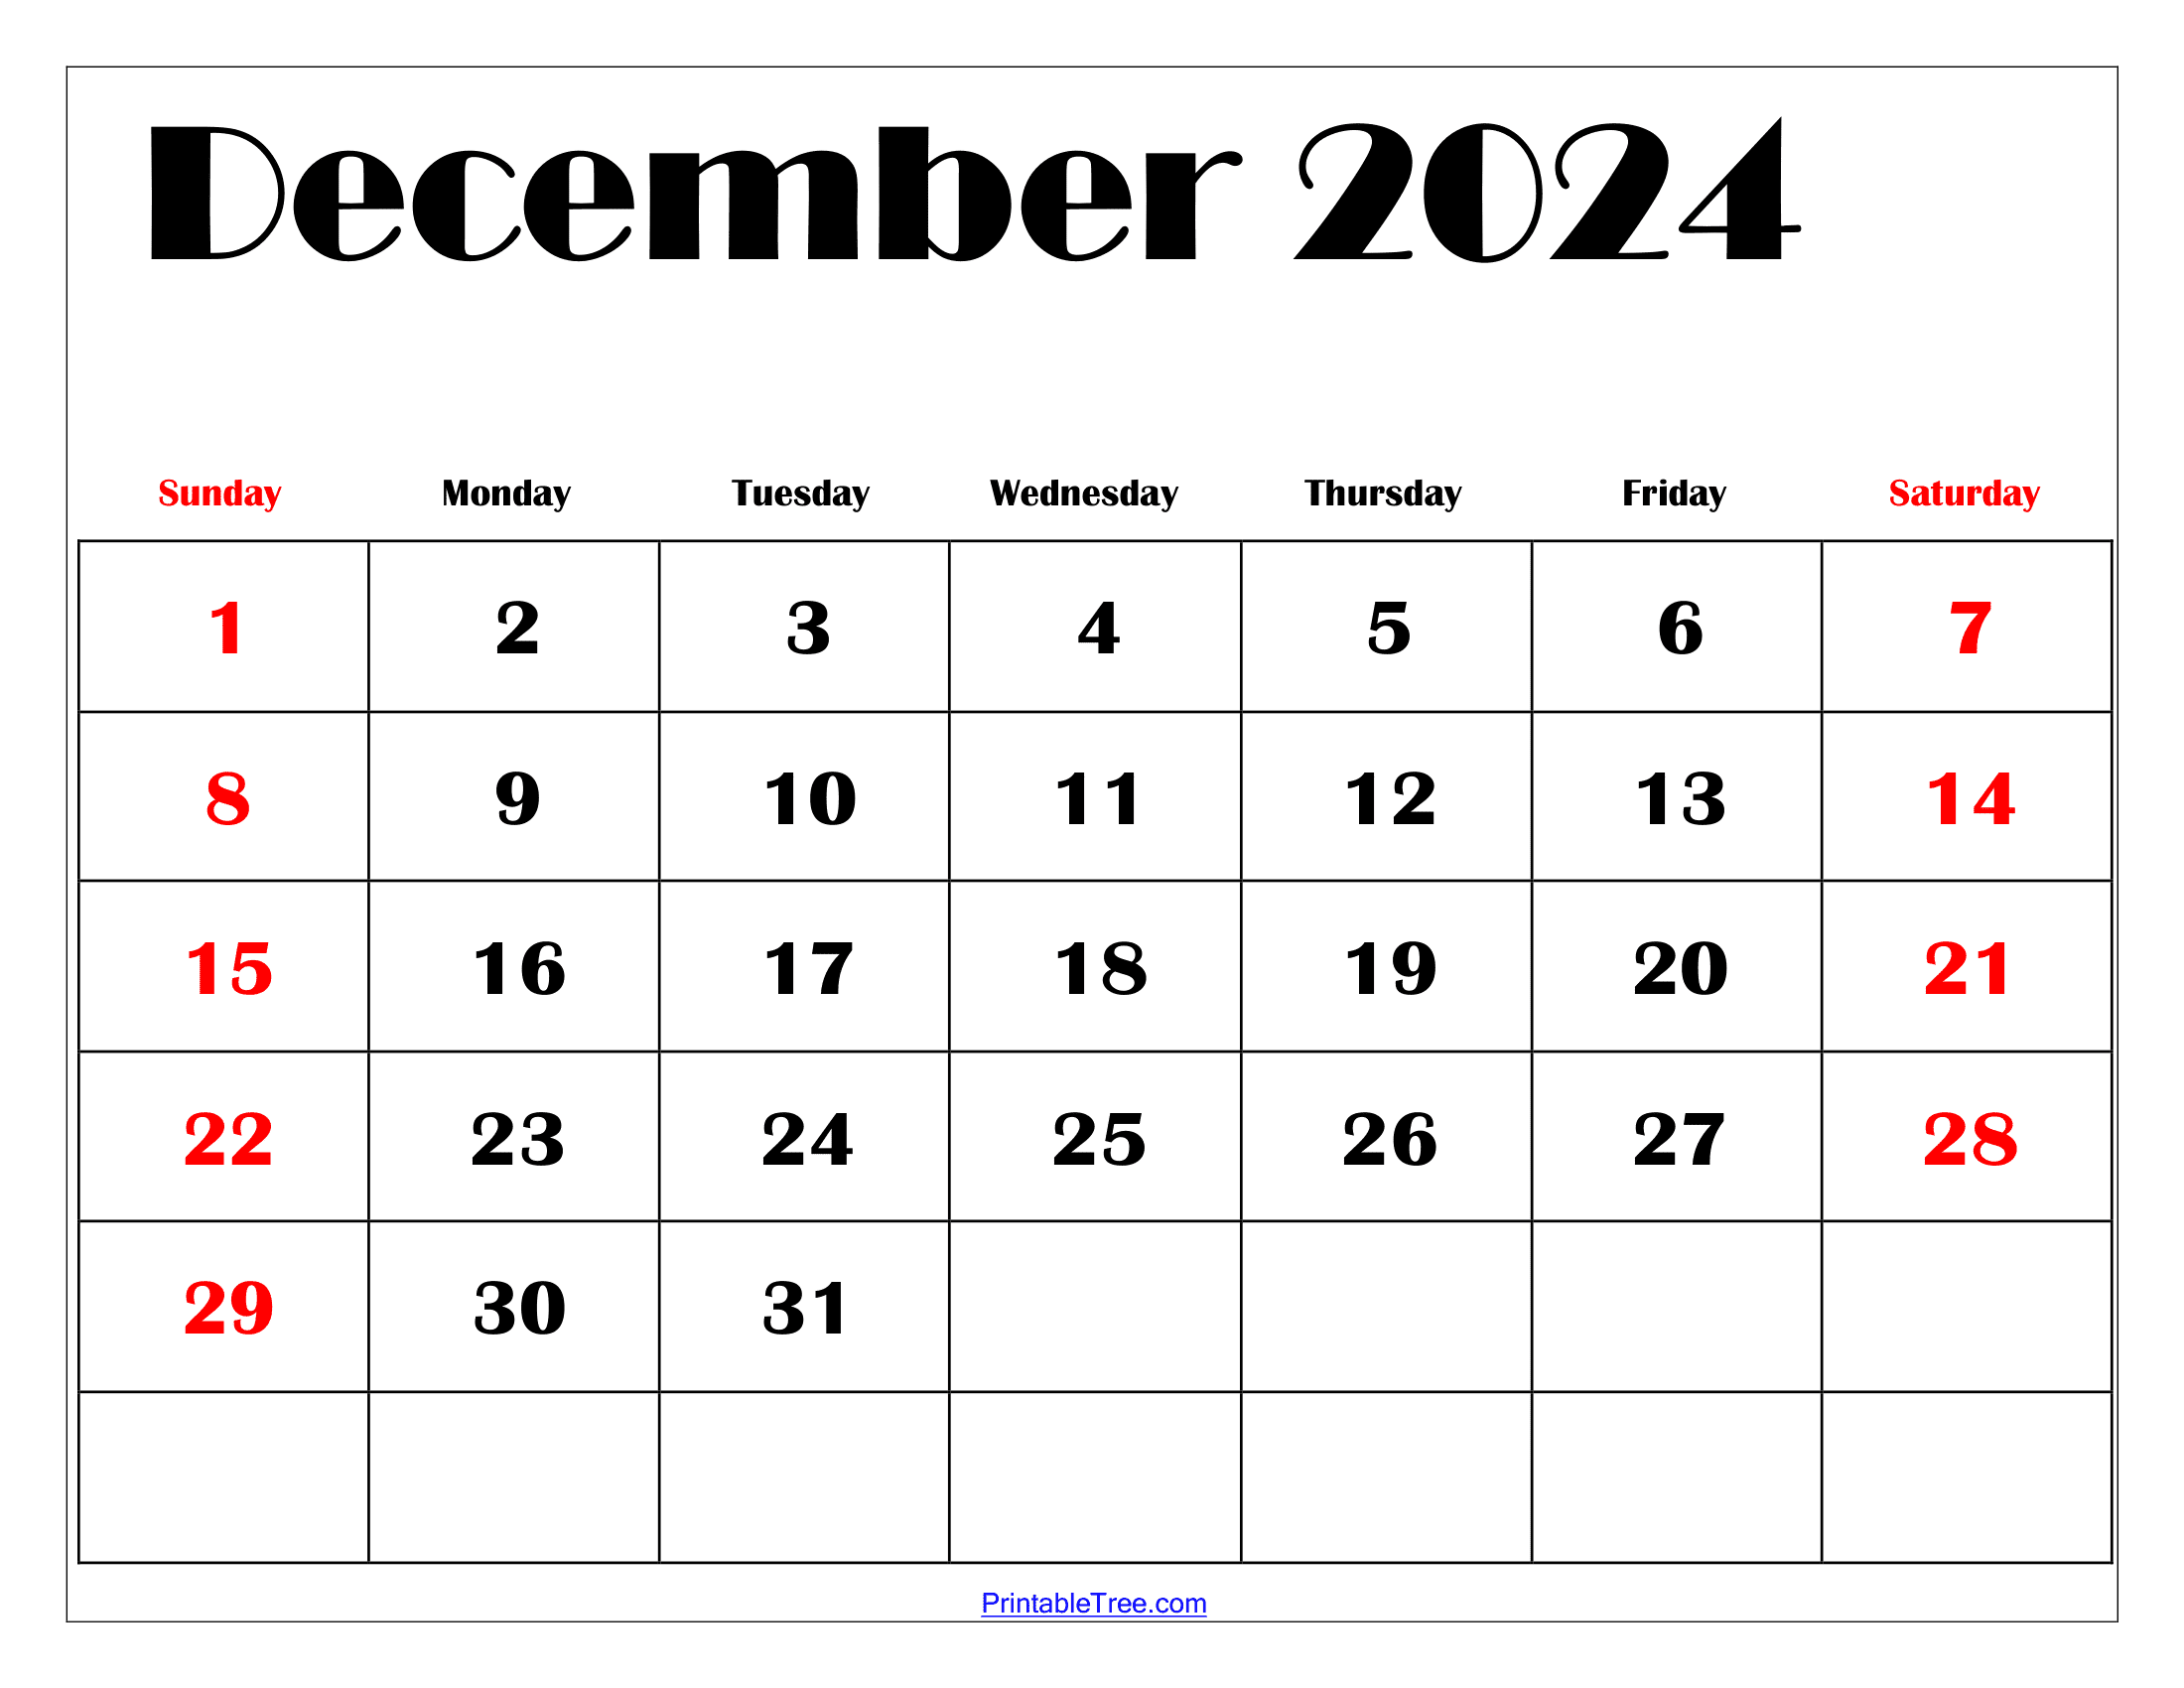 December 2024 Calendar Printable Pdf Blank Free Templates within Free Printable Calendar 2024 Dec